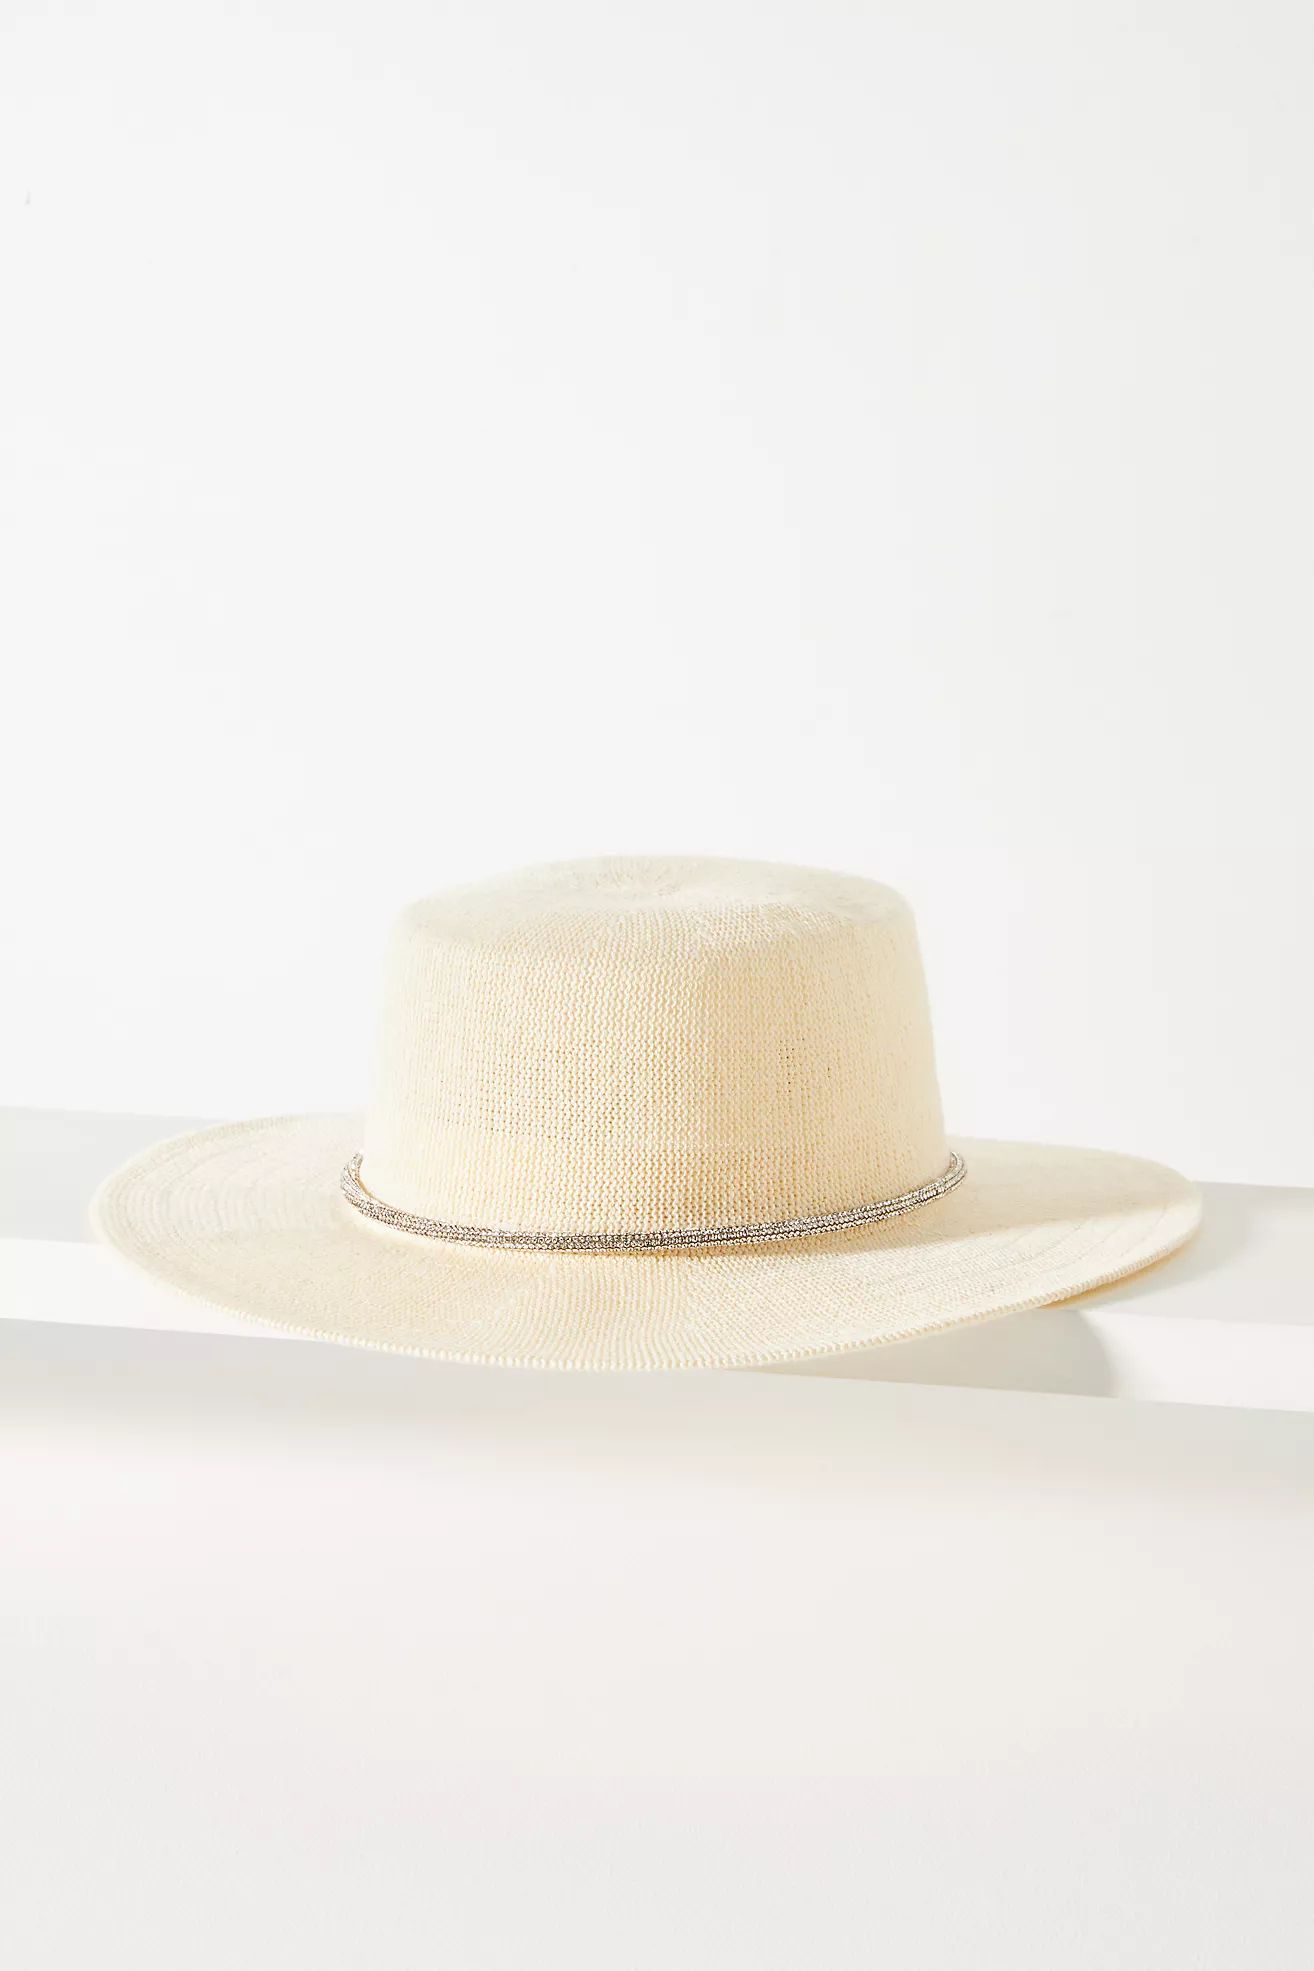 Rhinestone Boater Hat | Anthropologie (US)